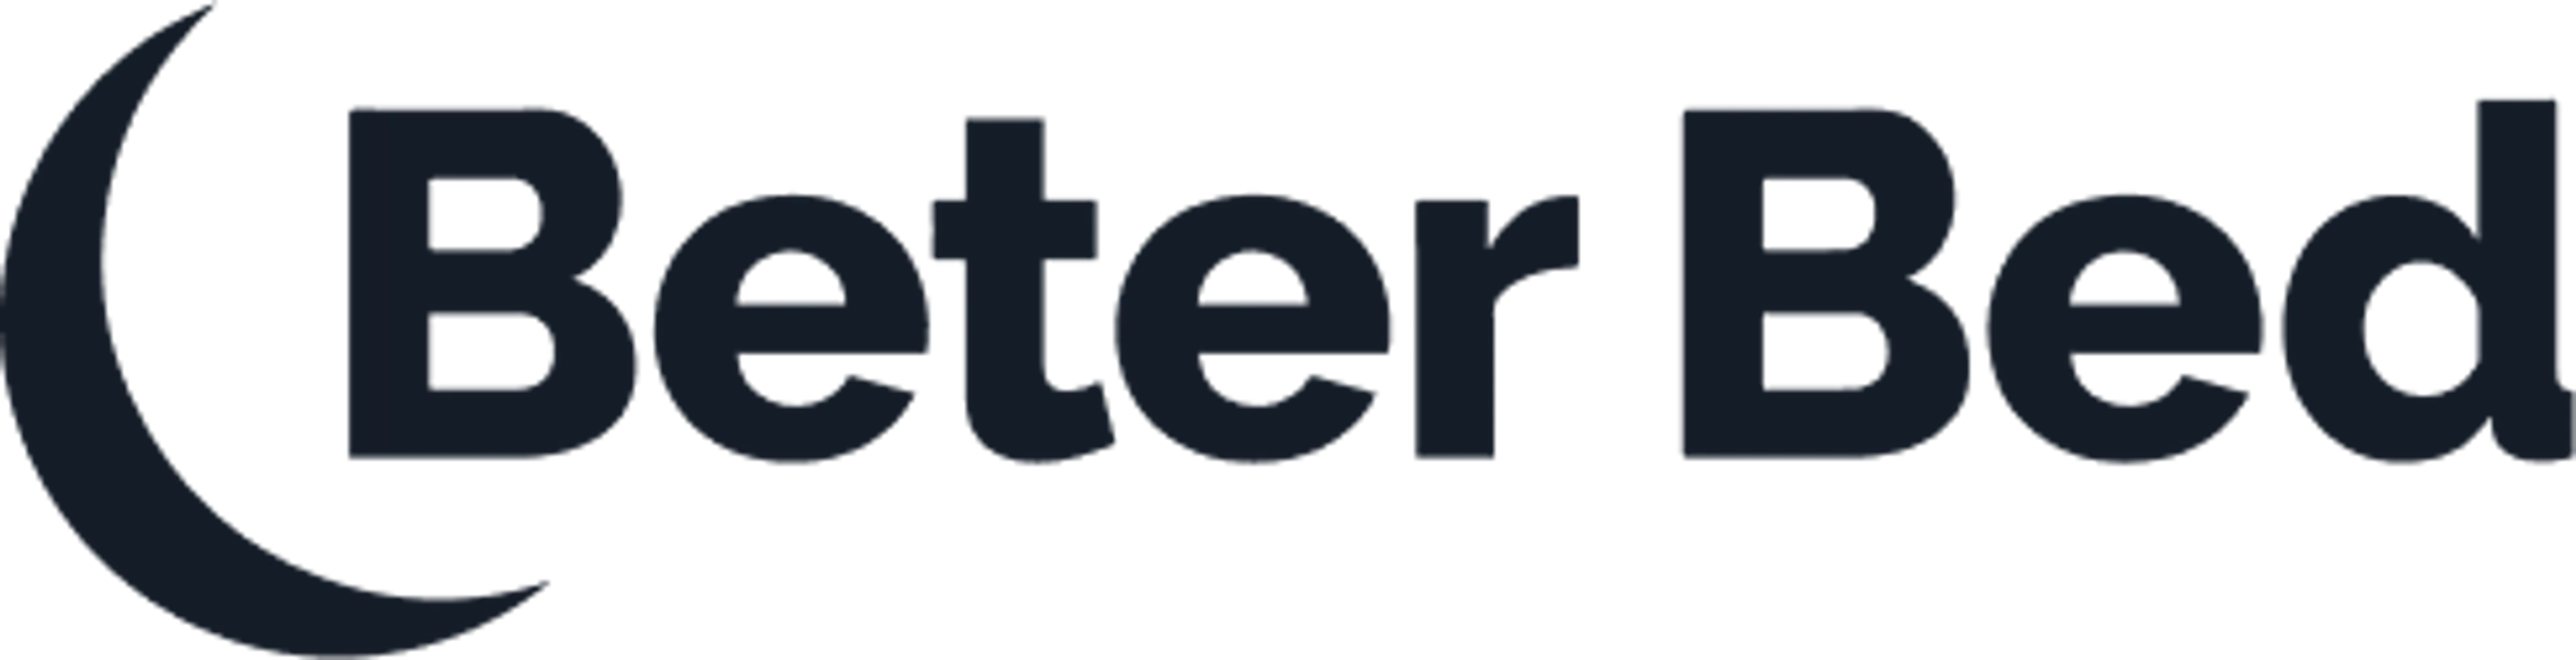 BETER BED logo